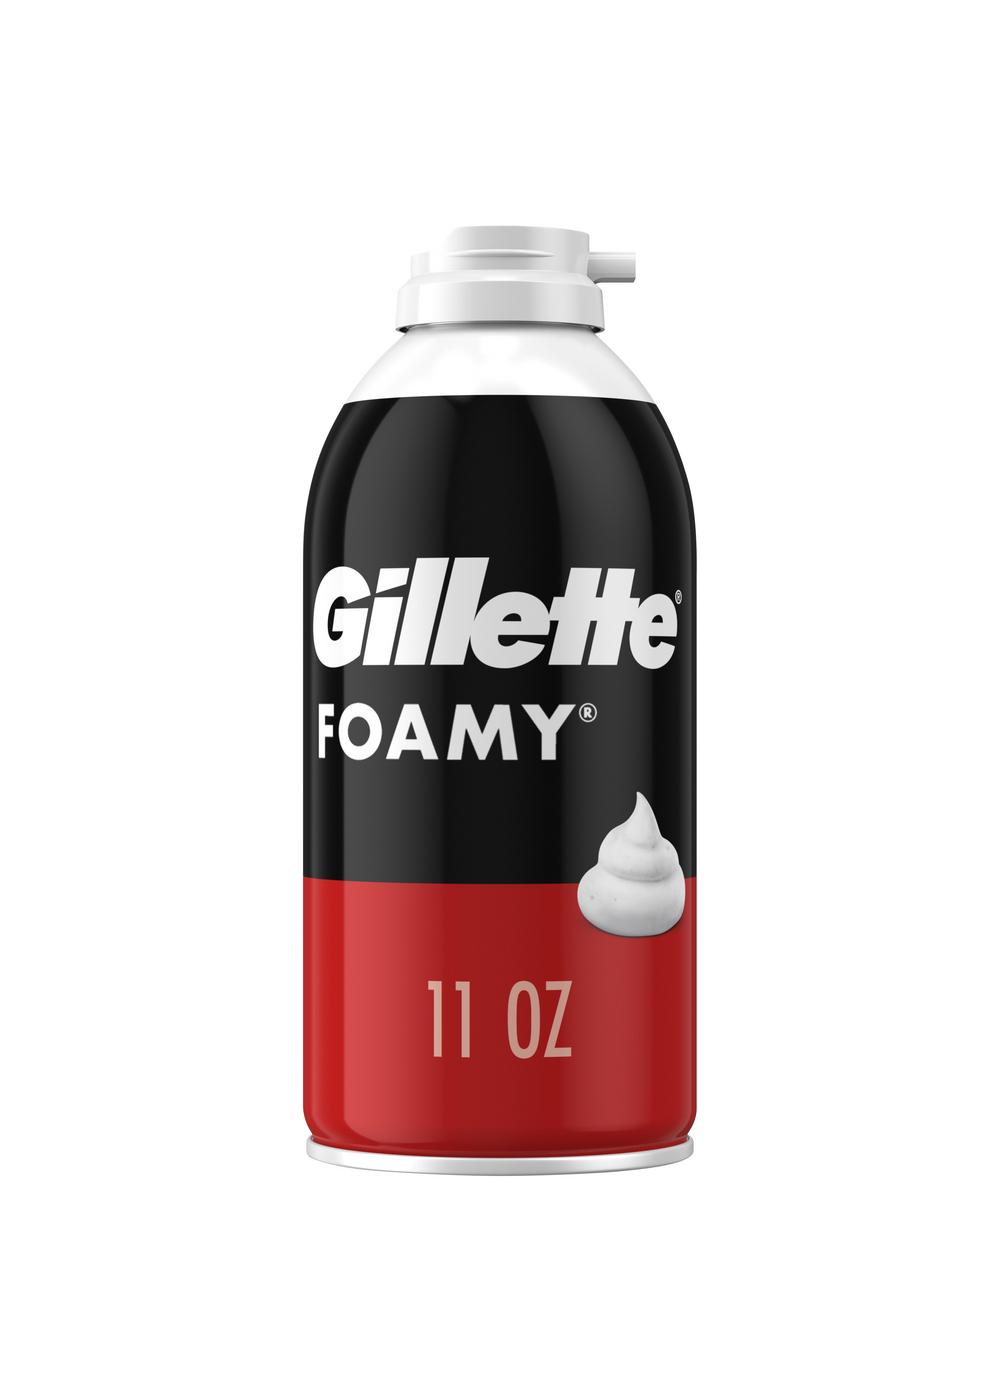 Gillette Foamy Shave Foam - Regular; image 8 of 10